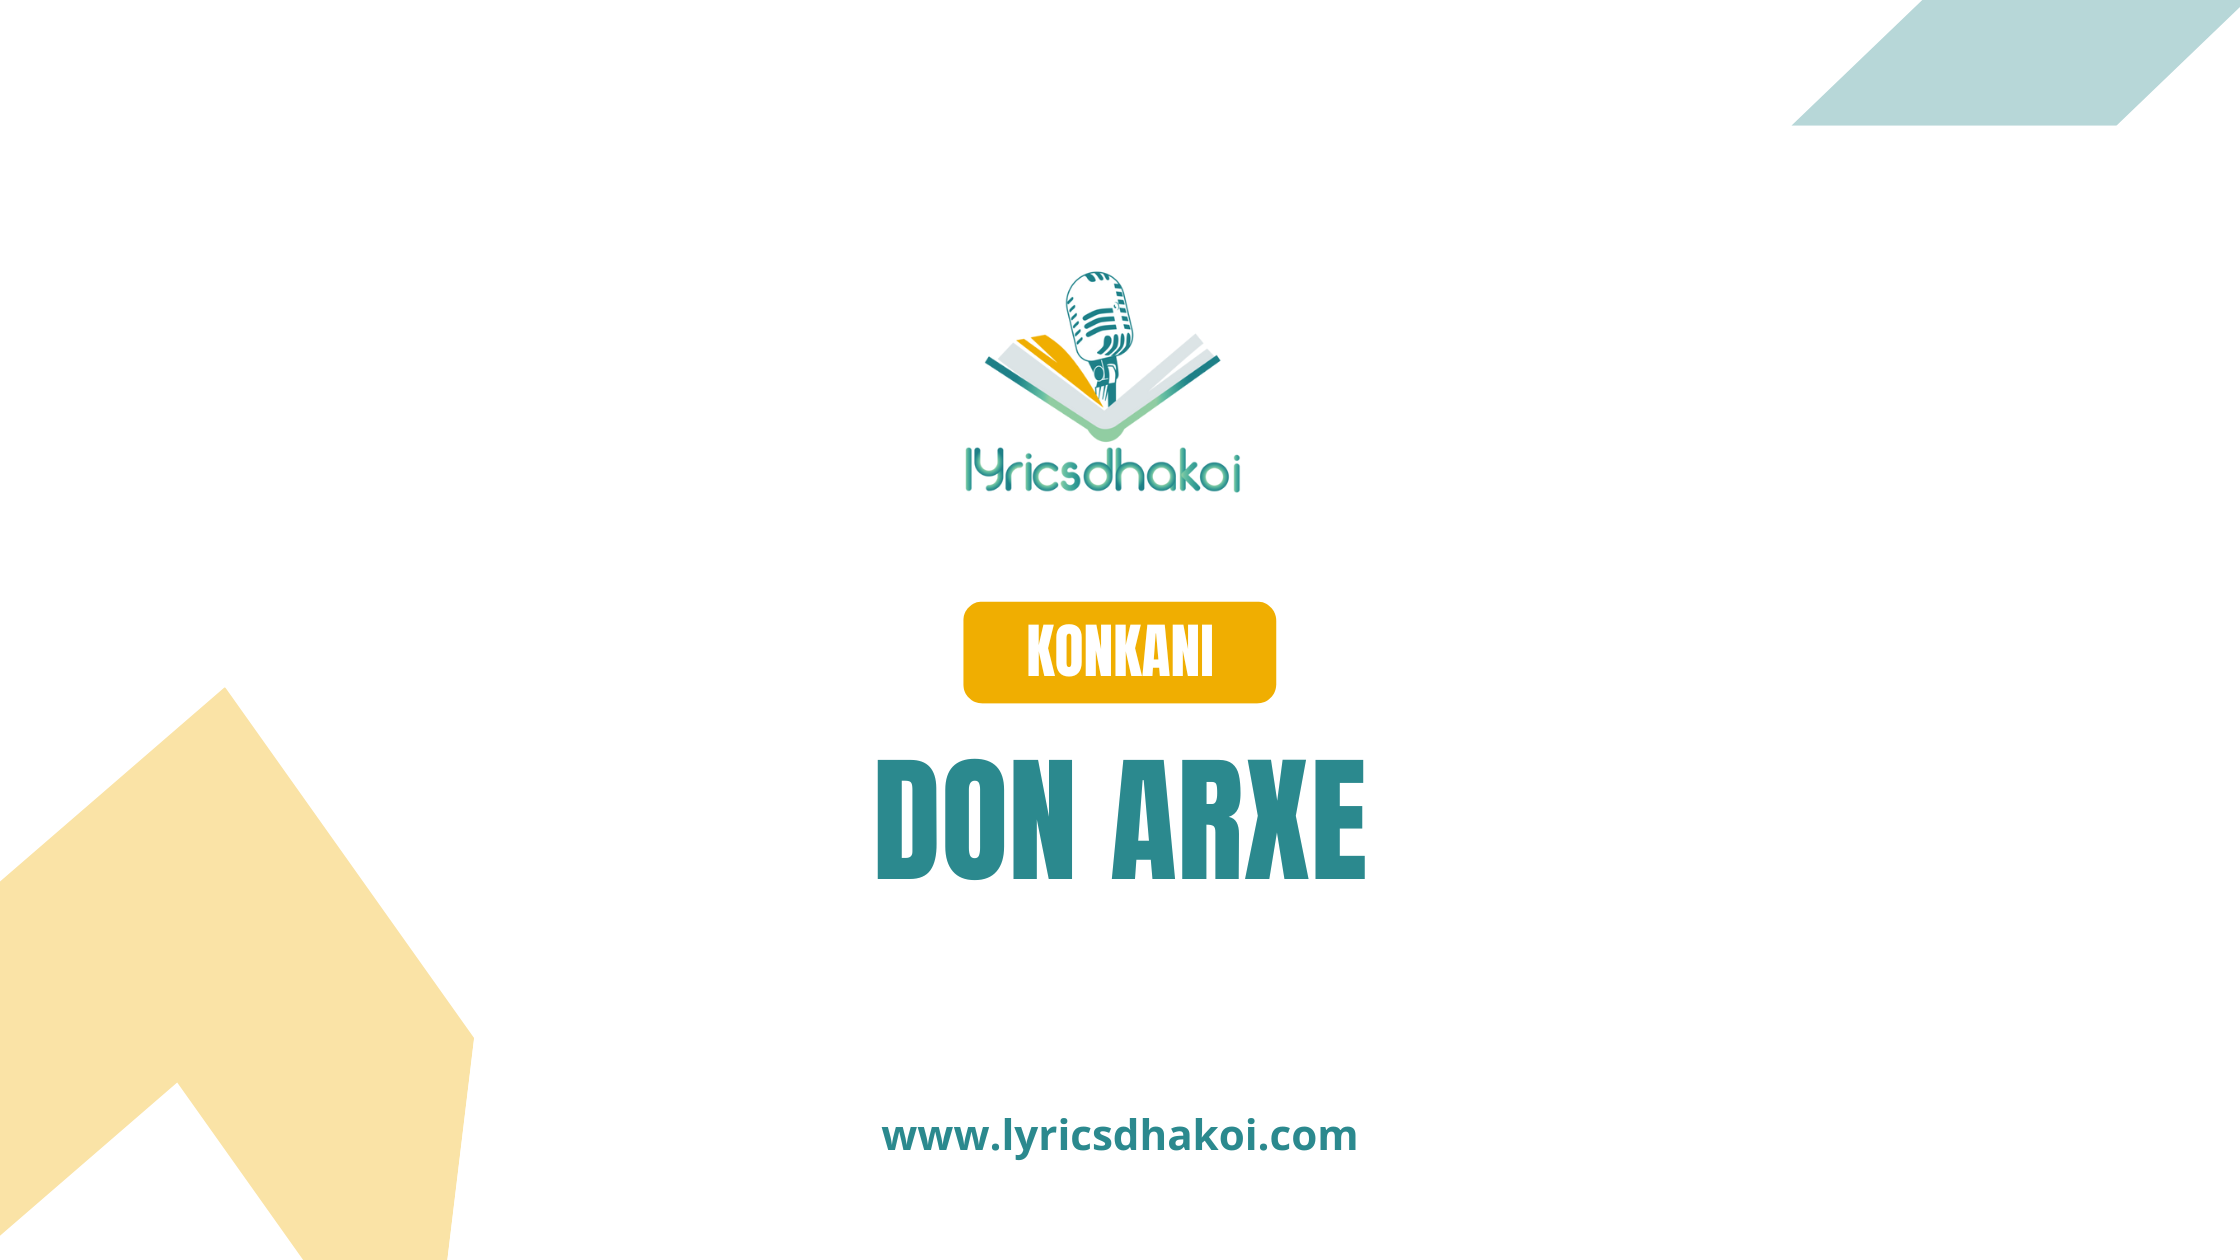 Don Arxe Konkani Lyrics for Karaoke Online - LyricsDhakoi.com